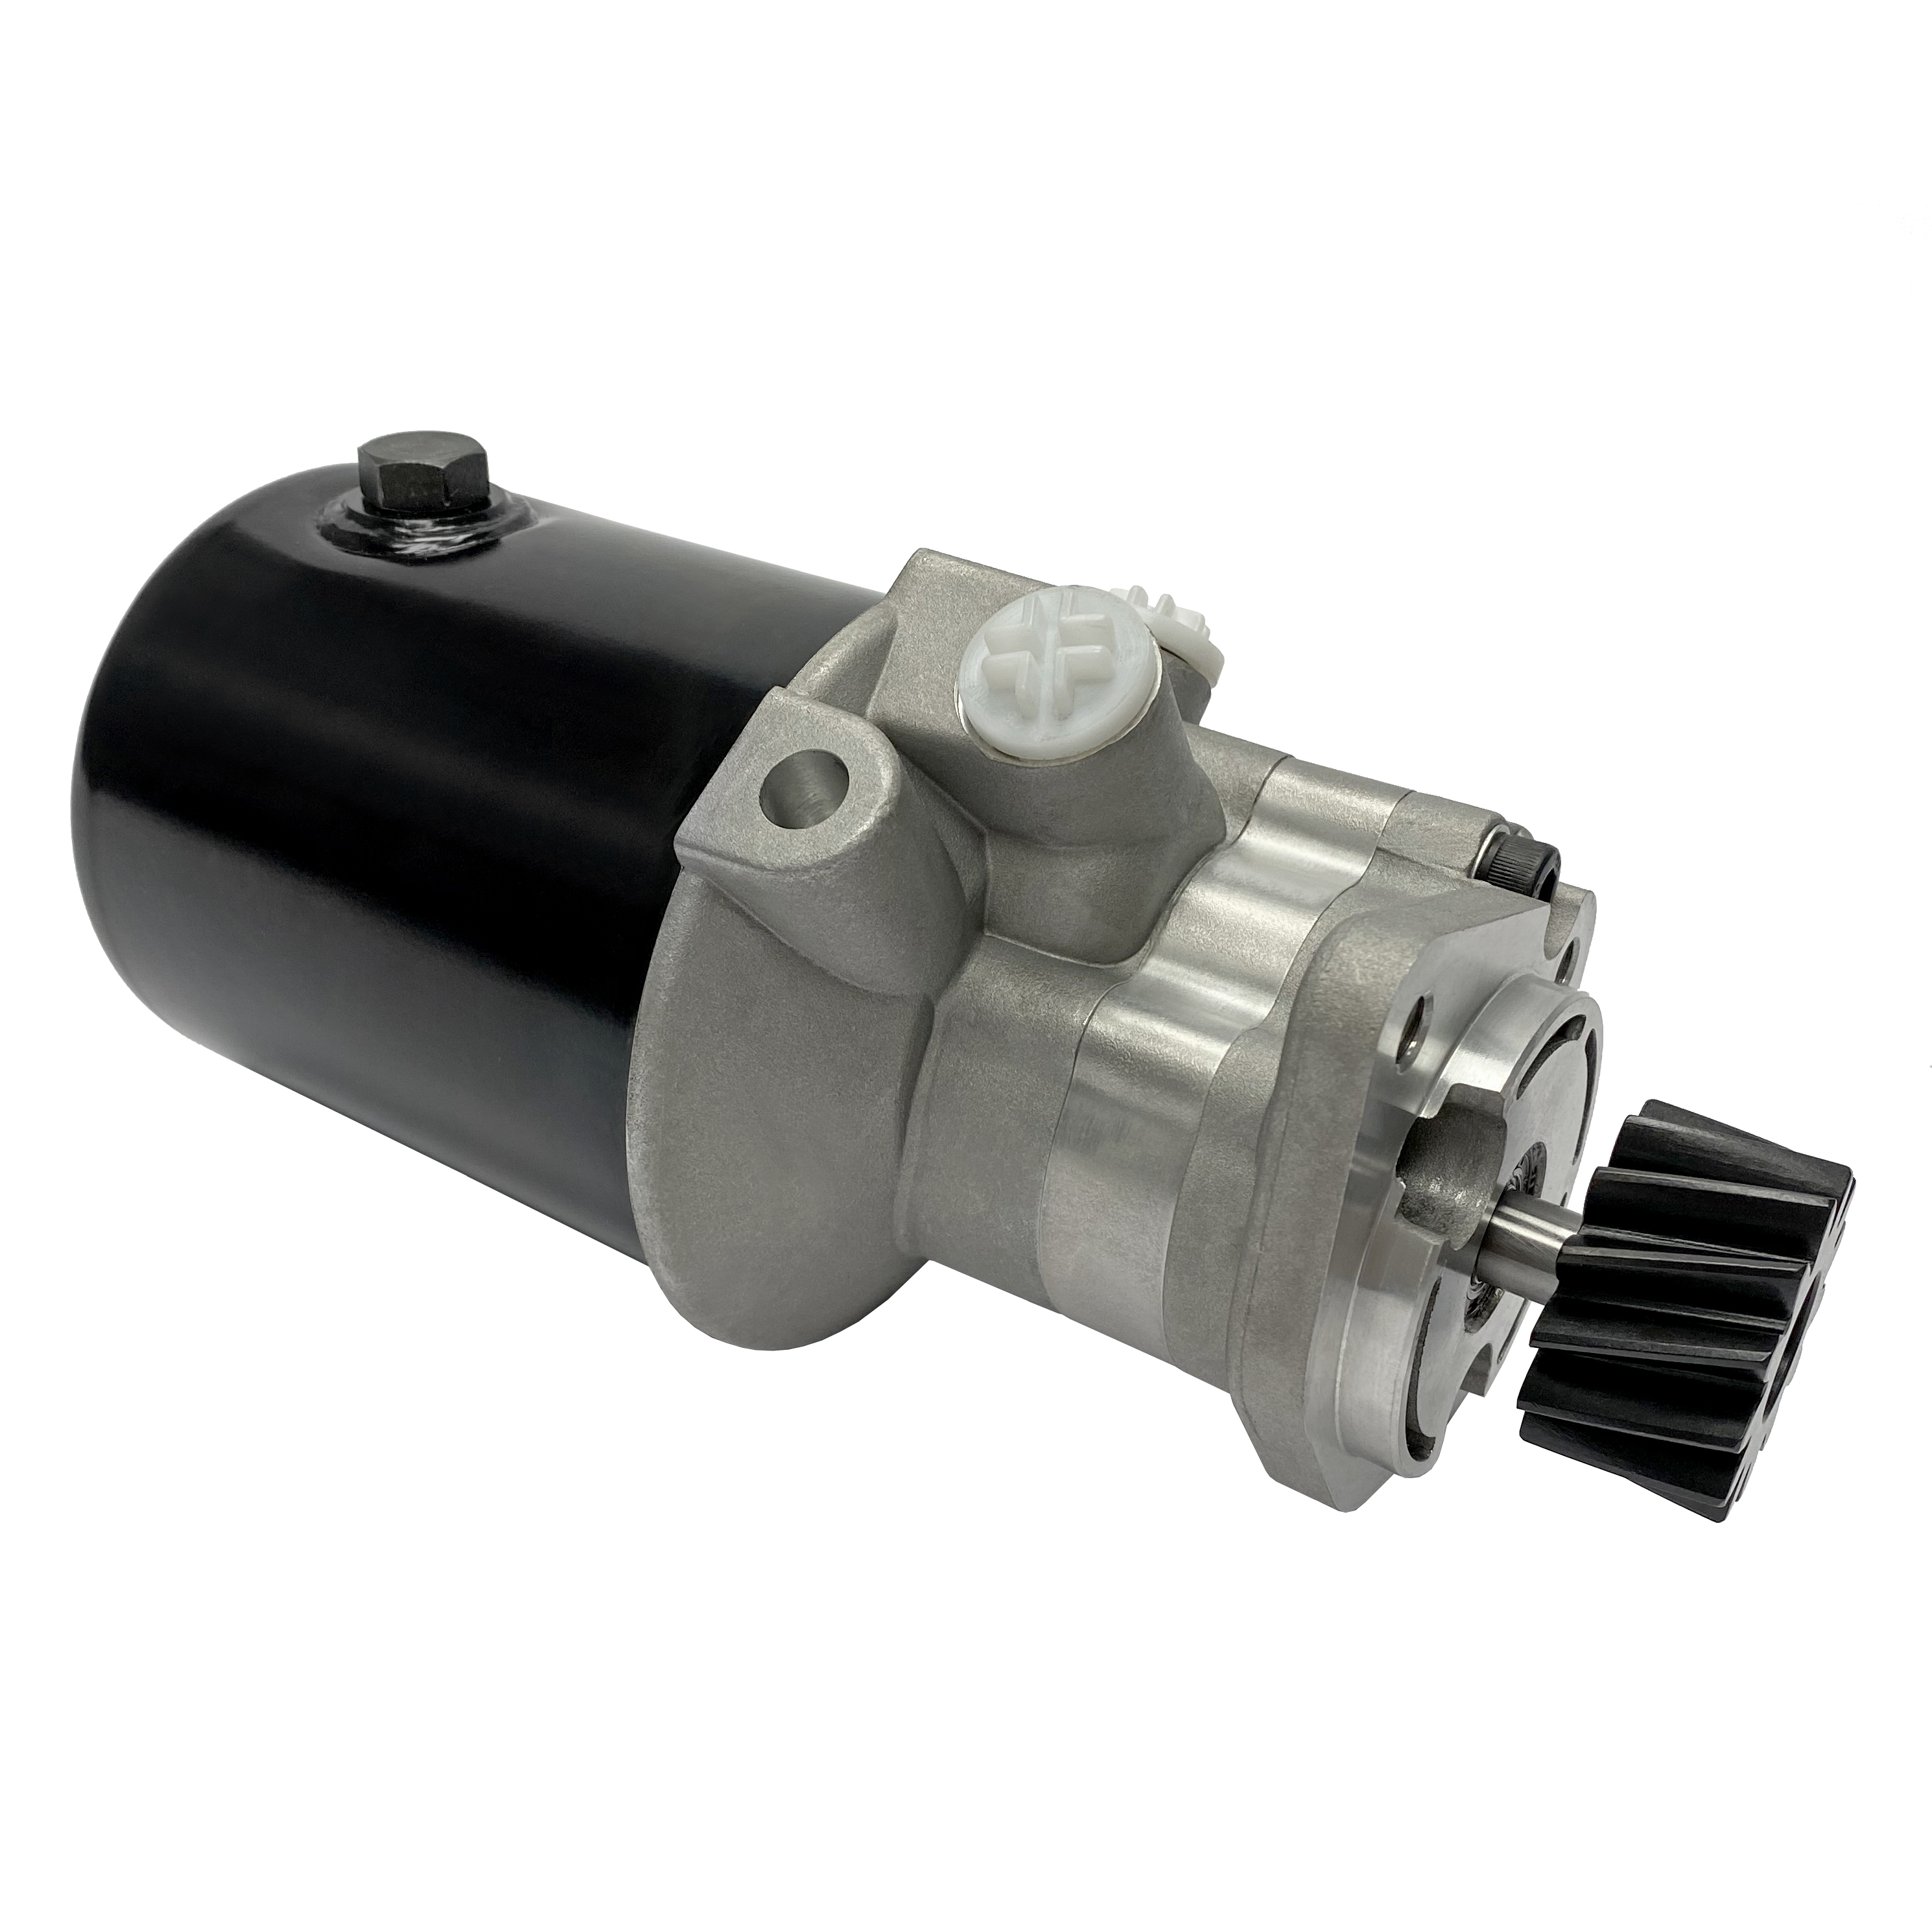 Hydraulic gear pump replacement for Massey Ferguson 523090M91 | Magister Hydraulics